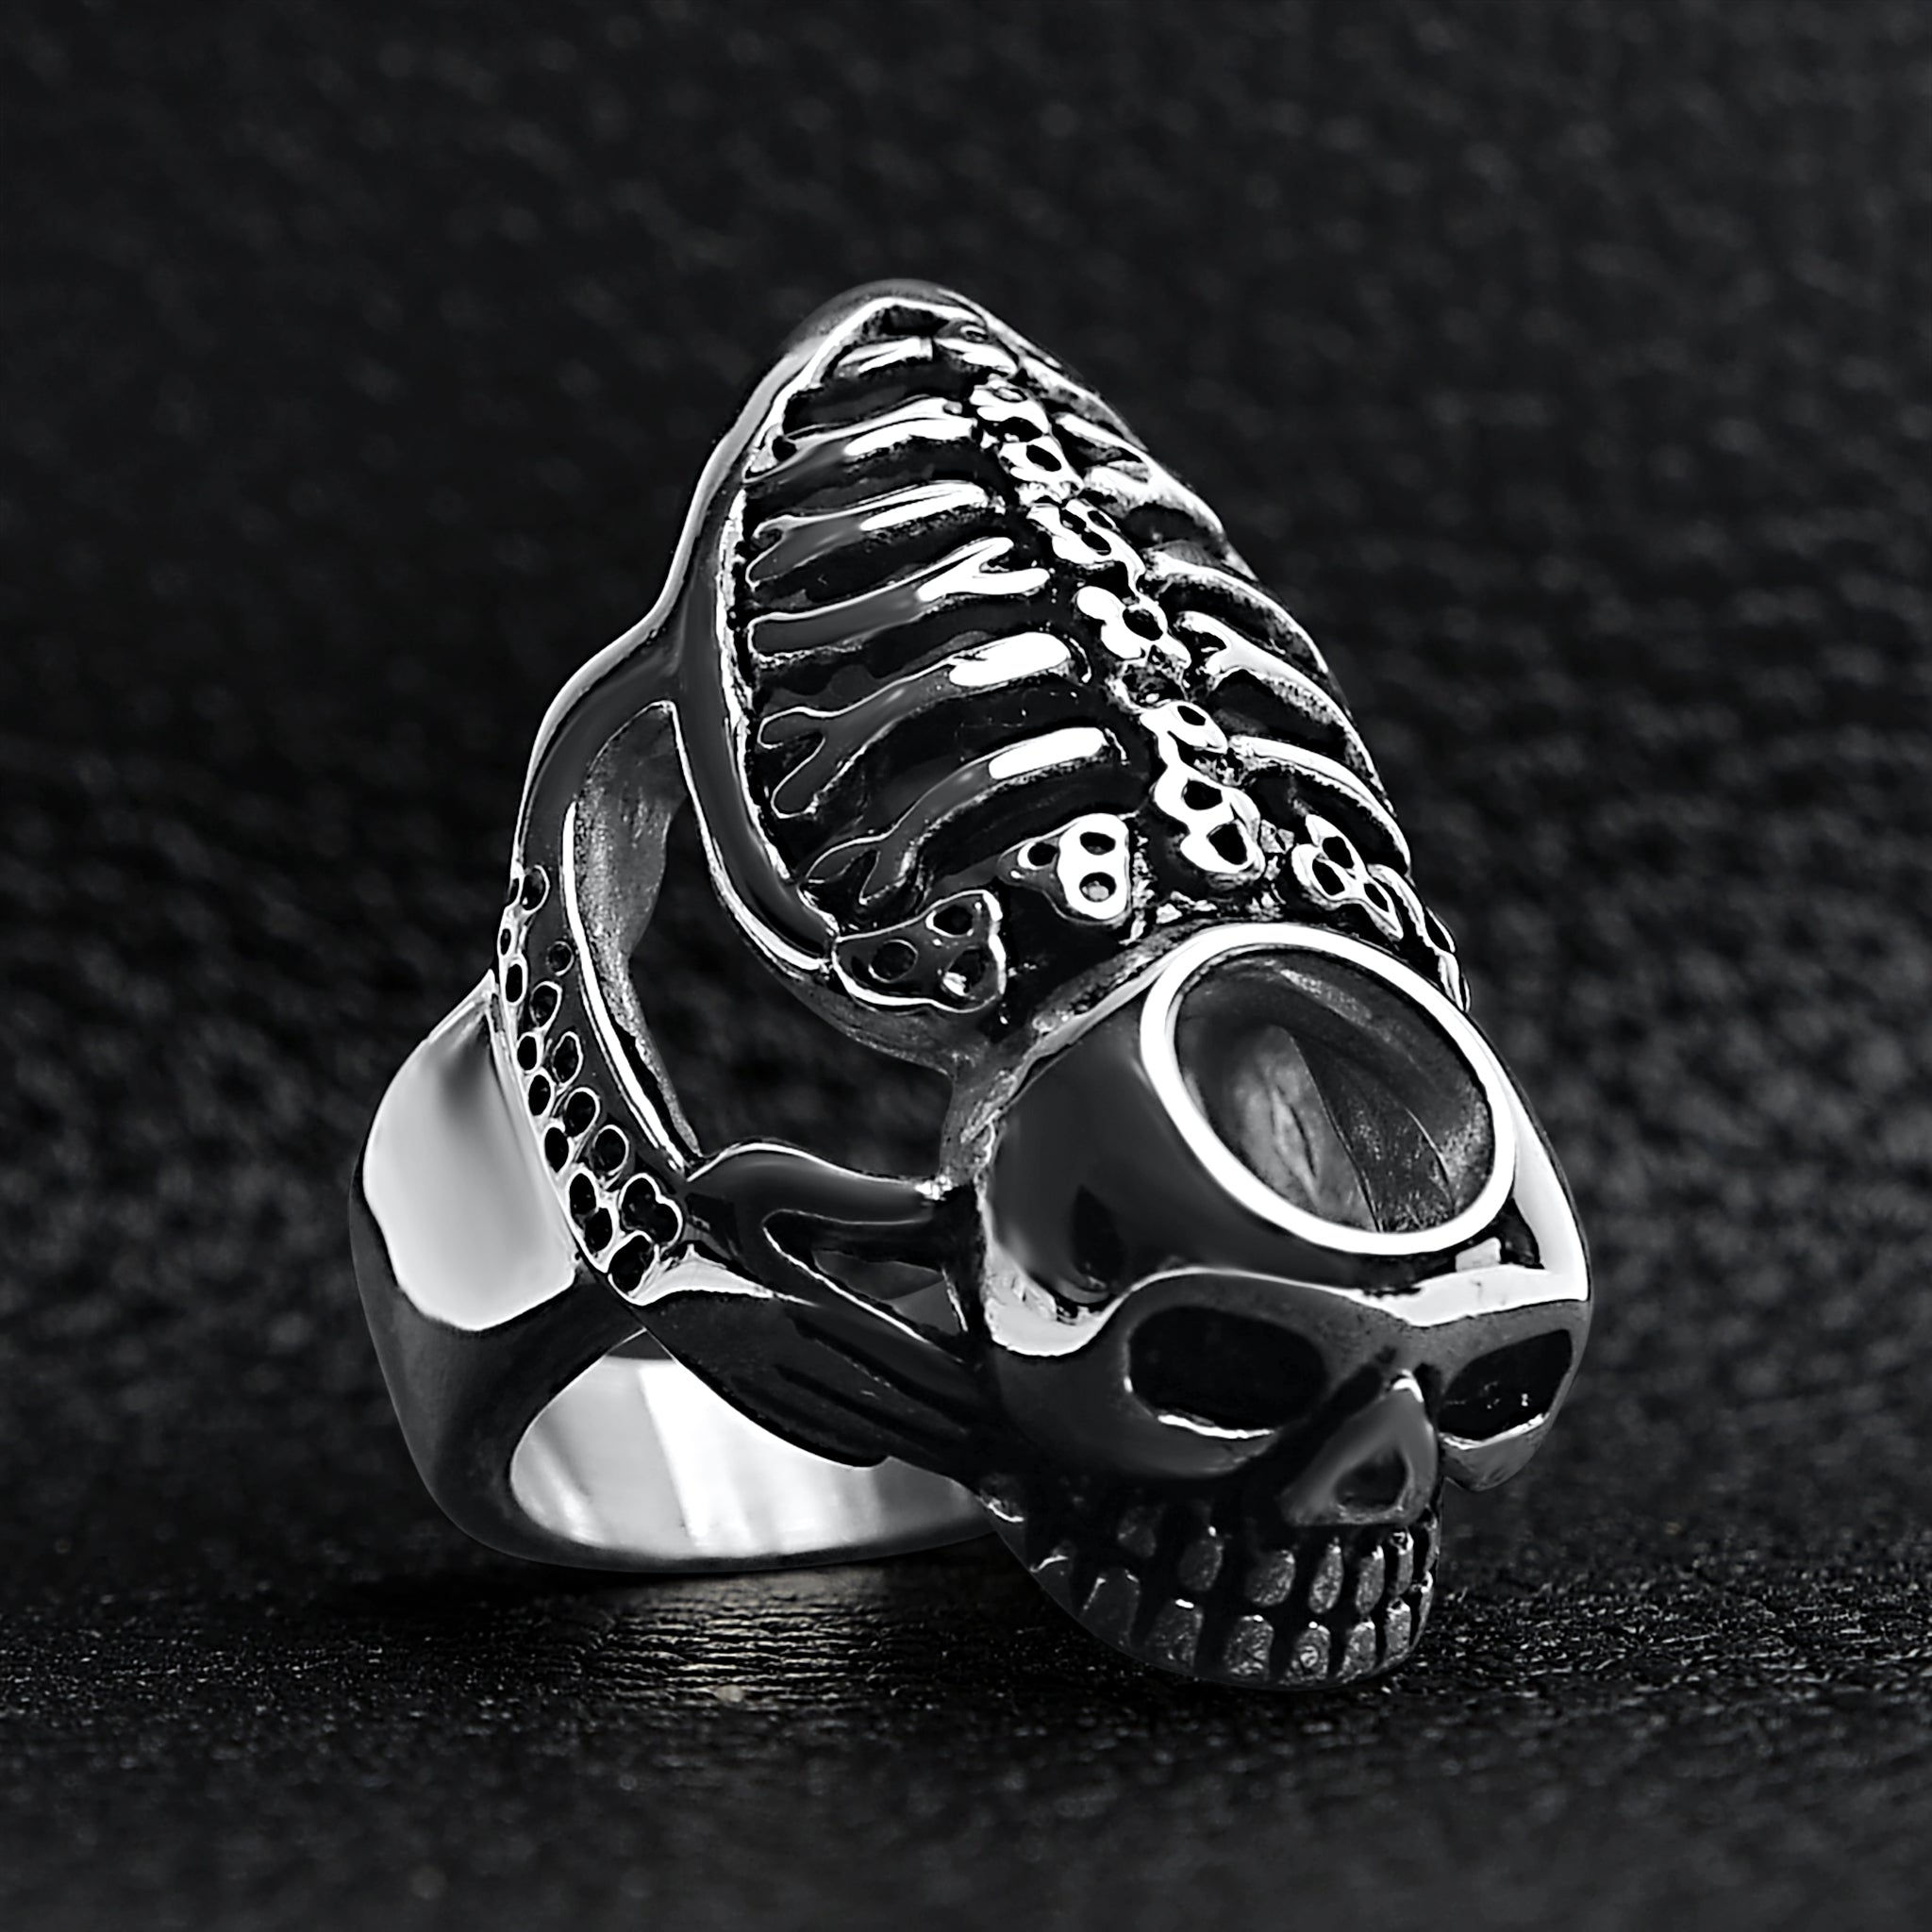 Detailed Skeleton Stainless Steel Ring - Spooky Style for Men - Hypoallergenic & Durable Bijou Her